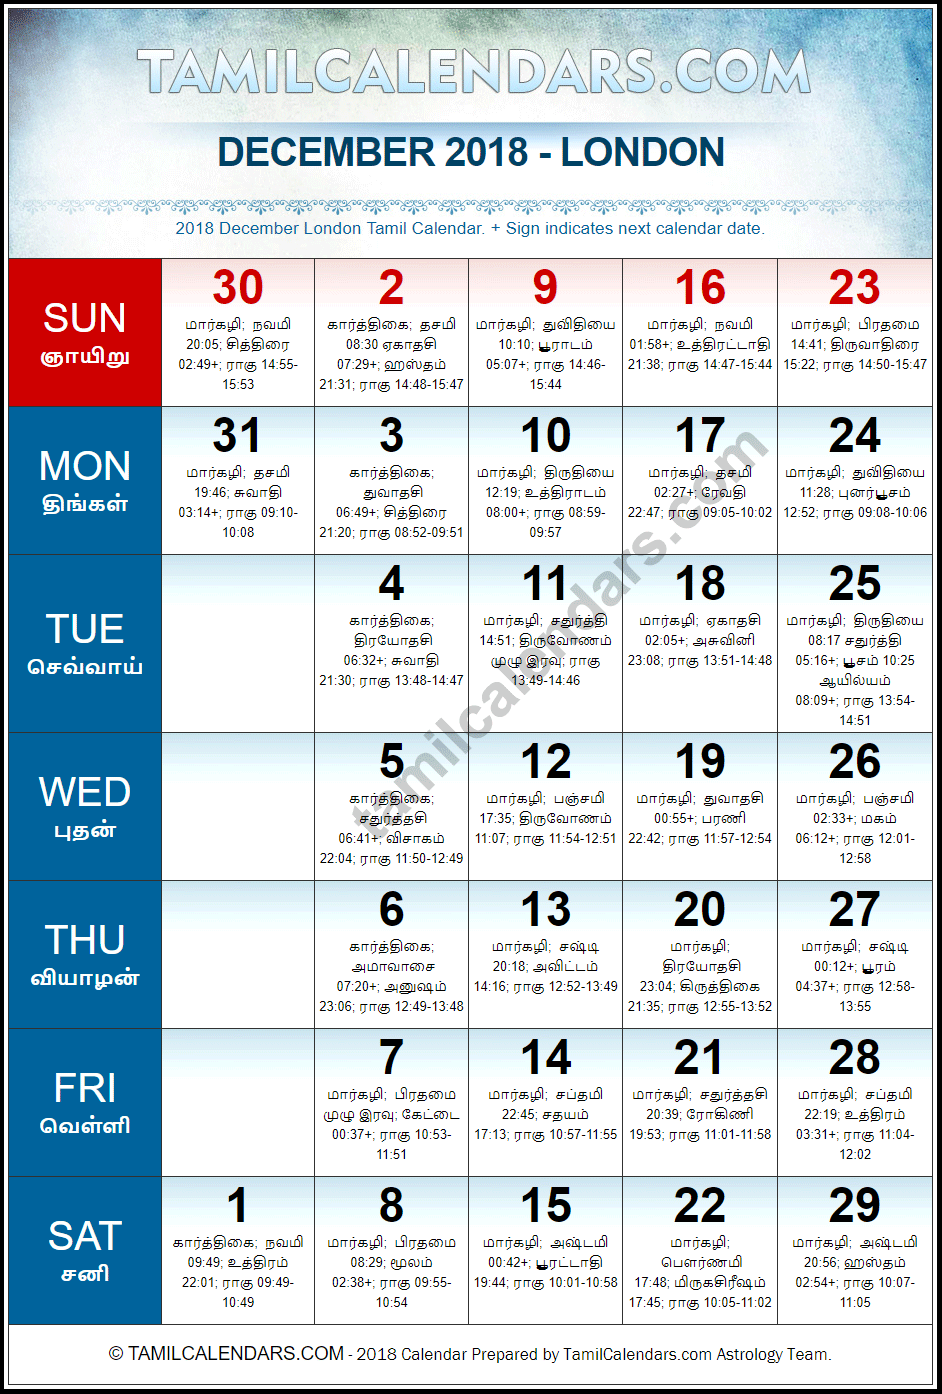 December 2018 Tamil Calendar for London, UK